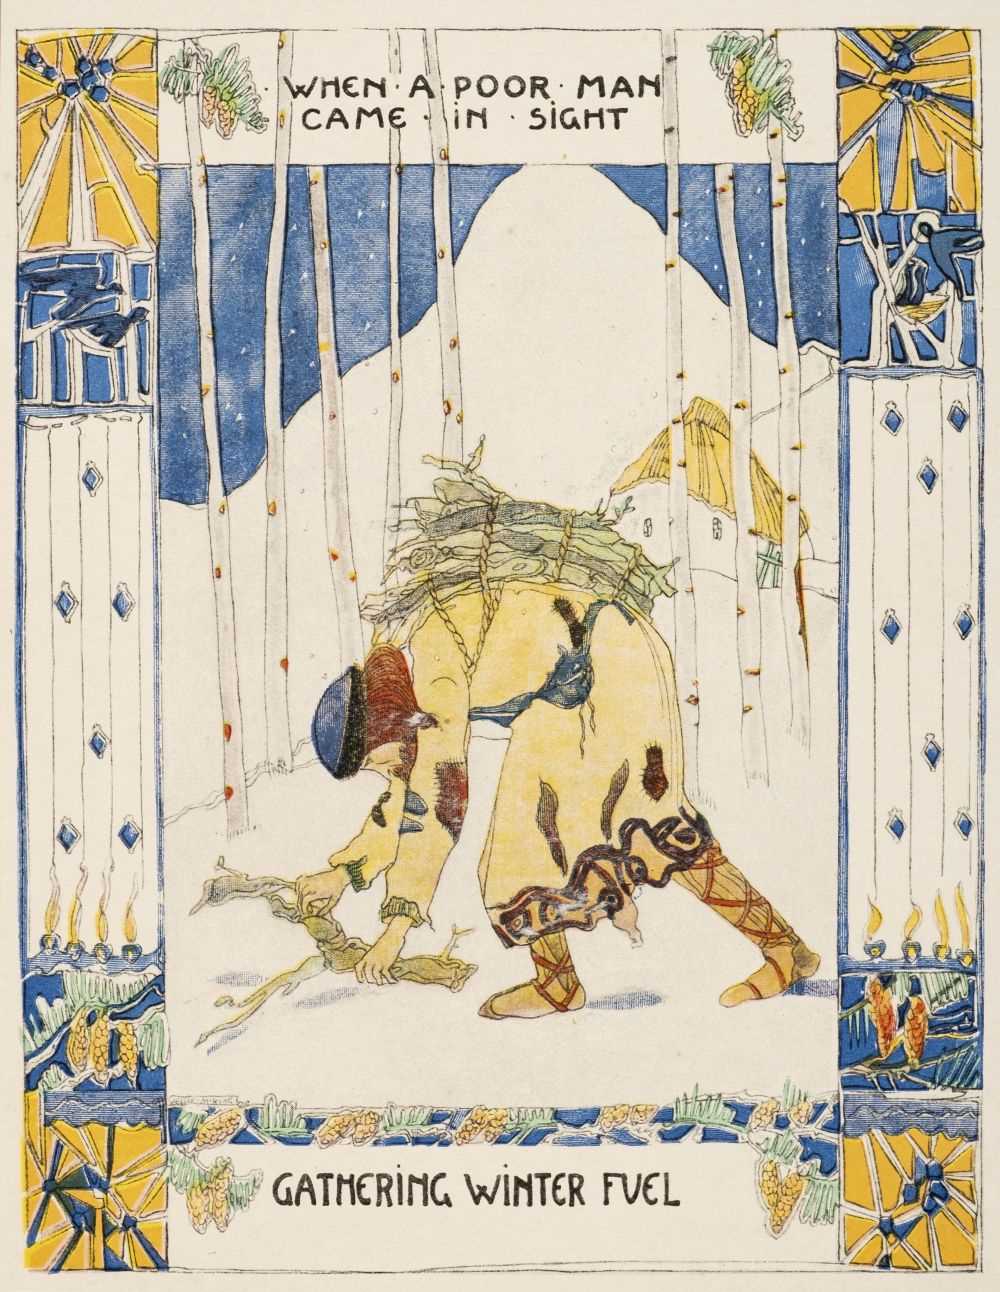 Lot 626 - King (Jessie M., illustrator). A Carol, Good King Wenceslas, [London: The Studio, 1919]